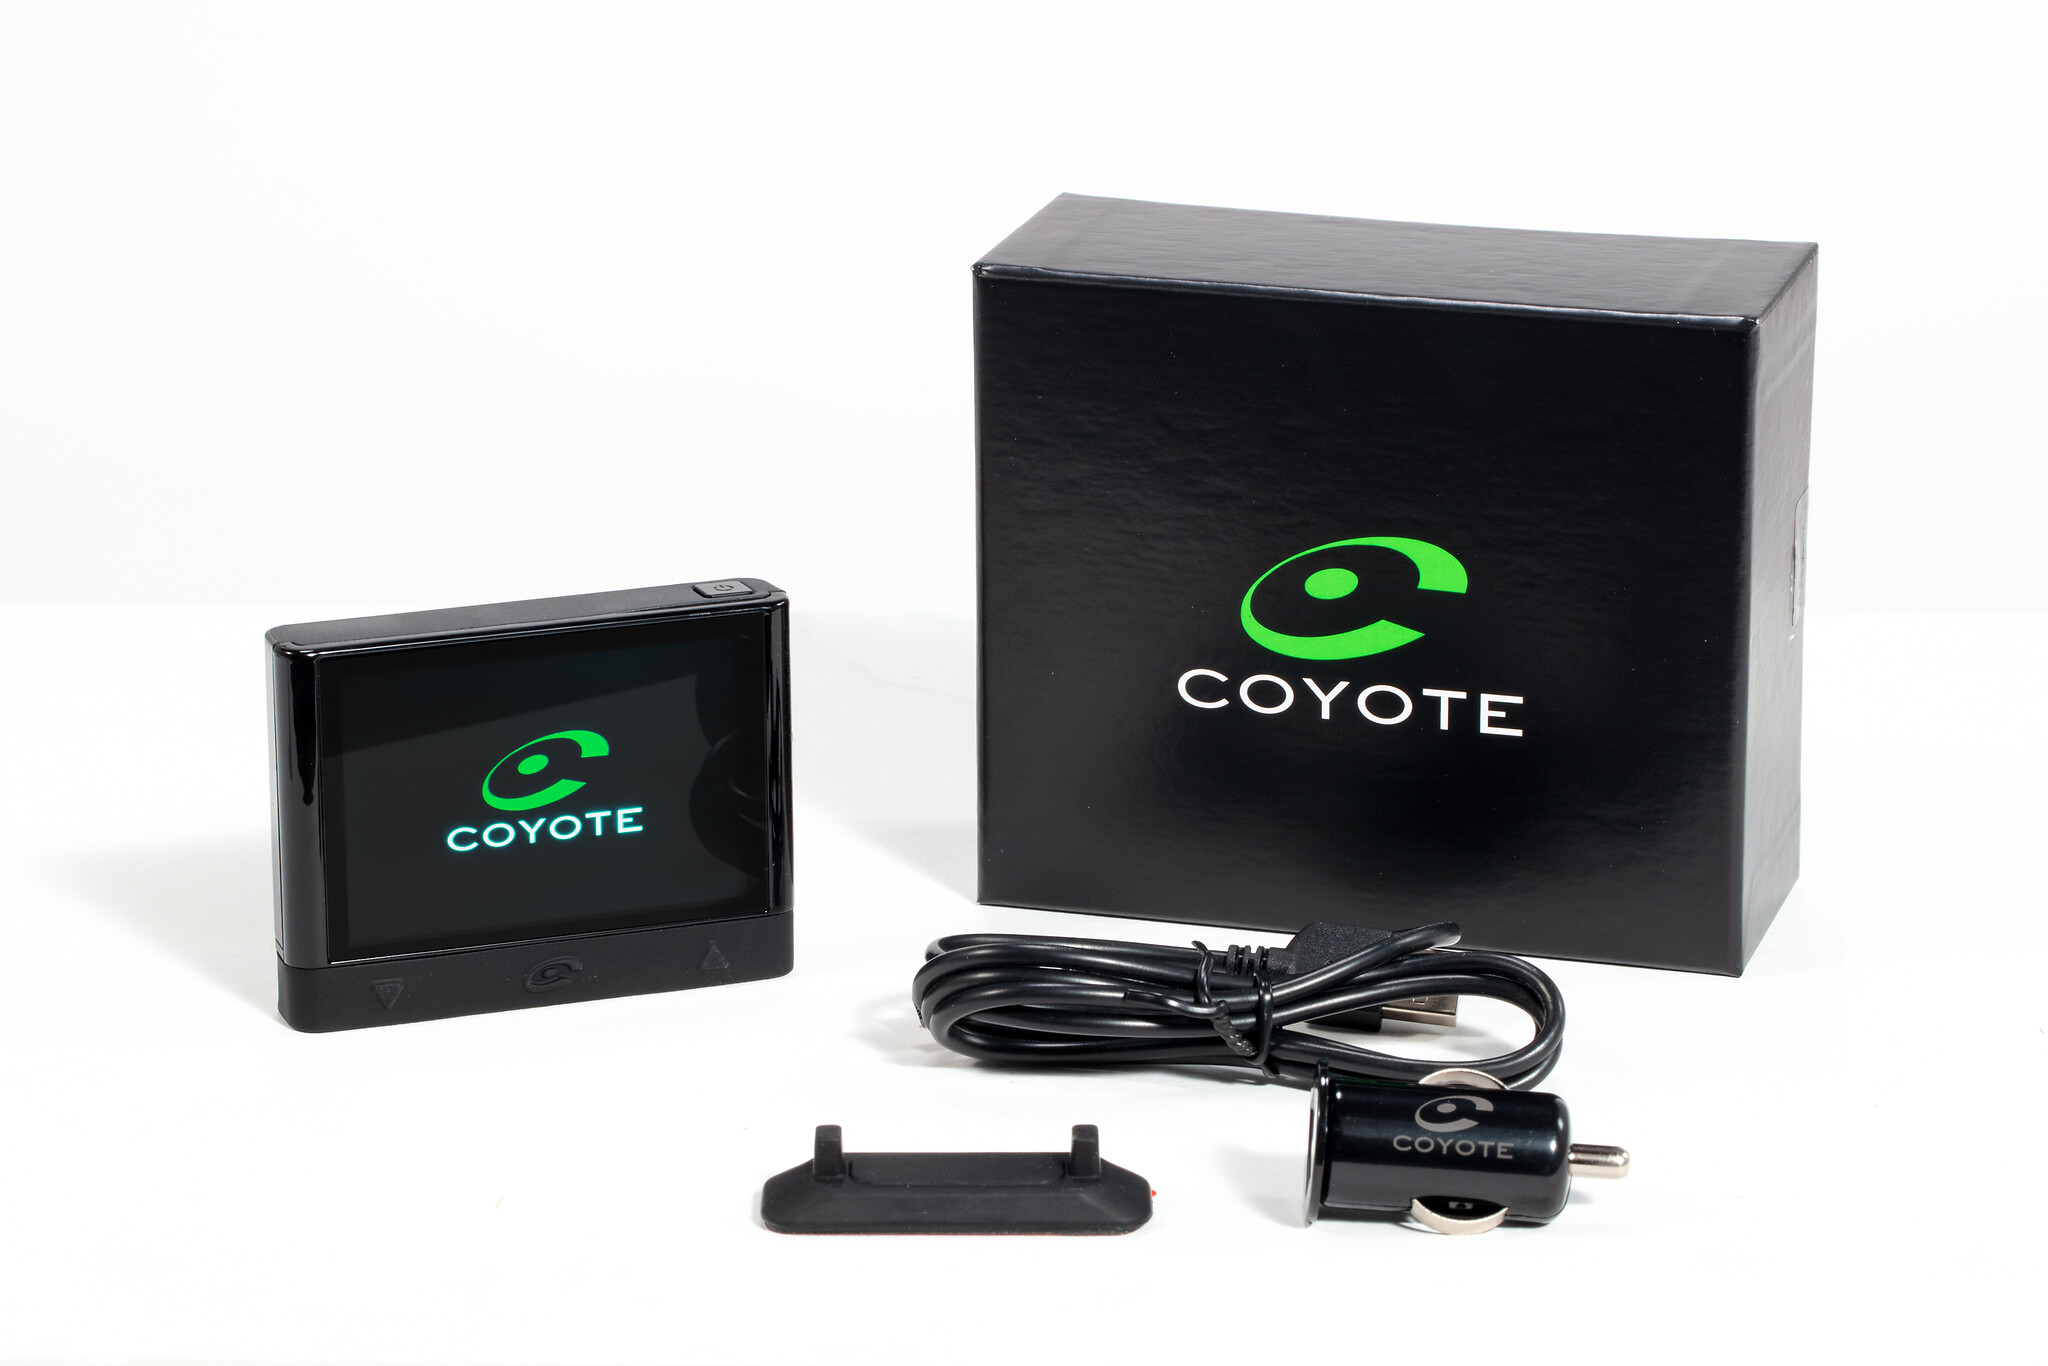 Coyote Mini + Support de fixation ventilation offert